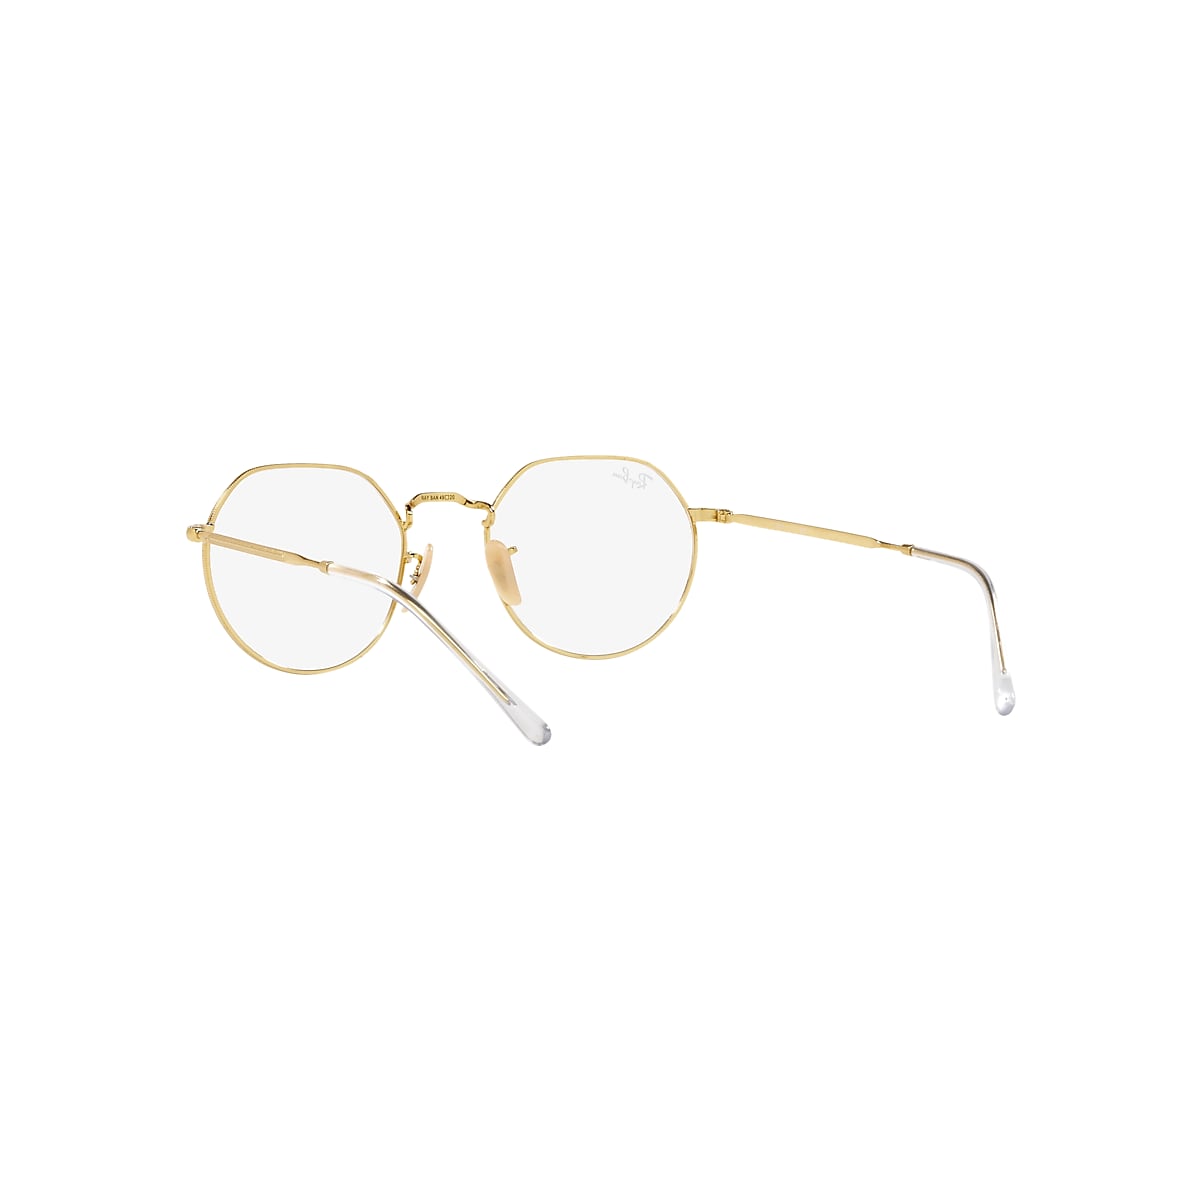 JACK OPTICS Eyeglasses with Gold Frame - RB6465 | Ray-Ban® US